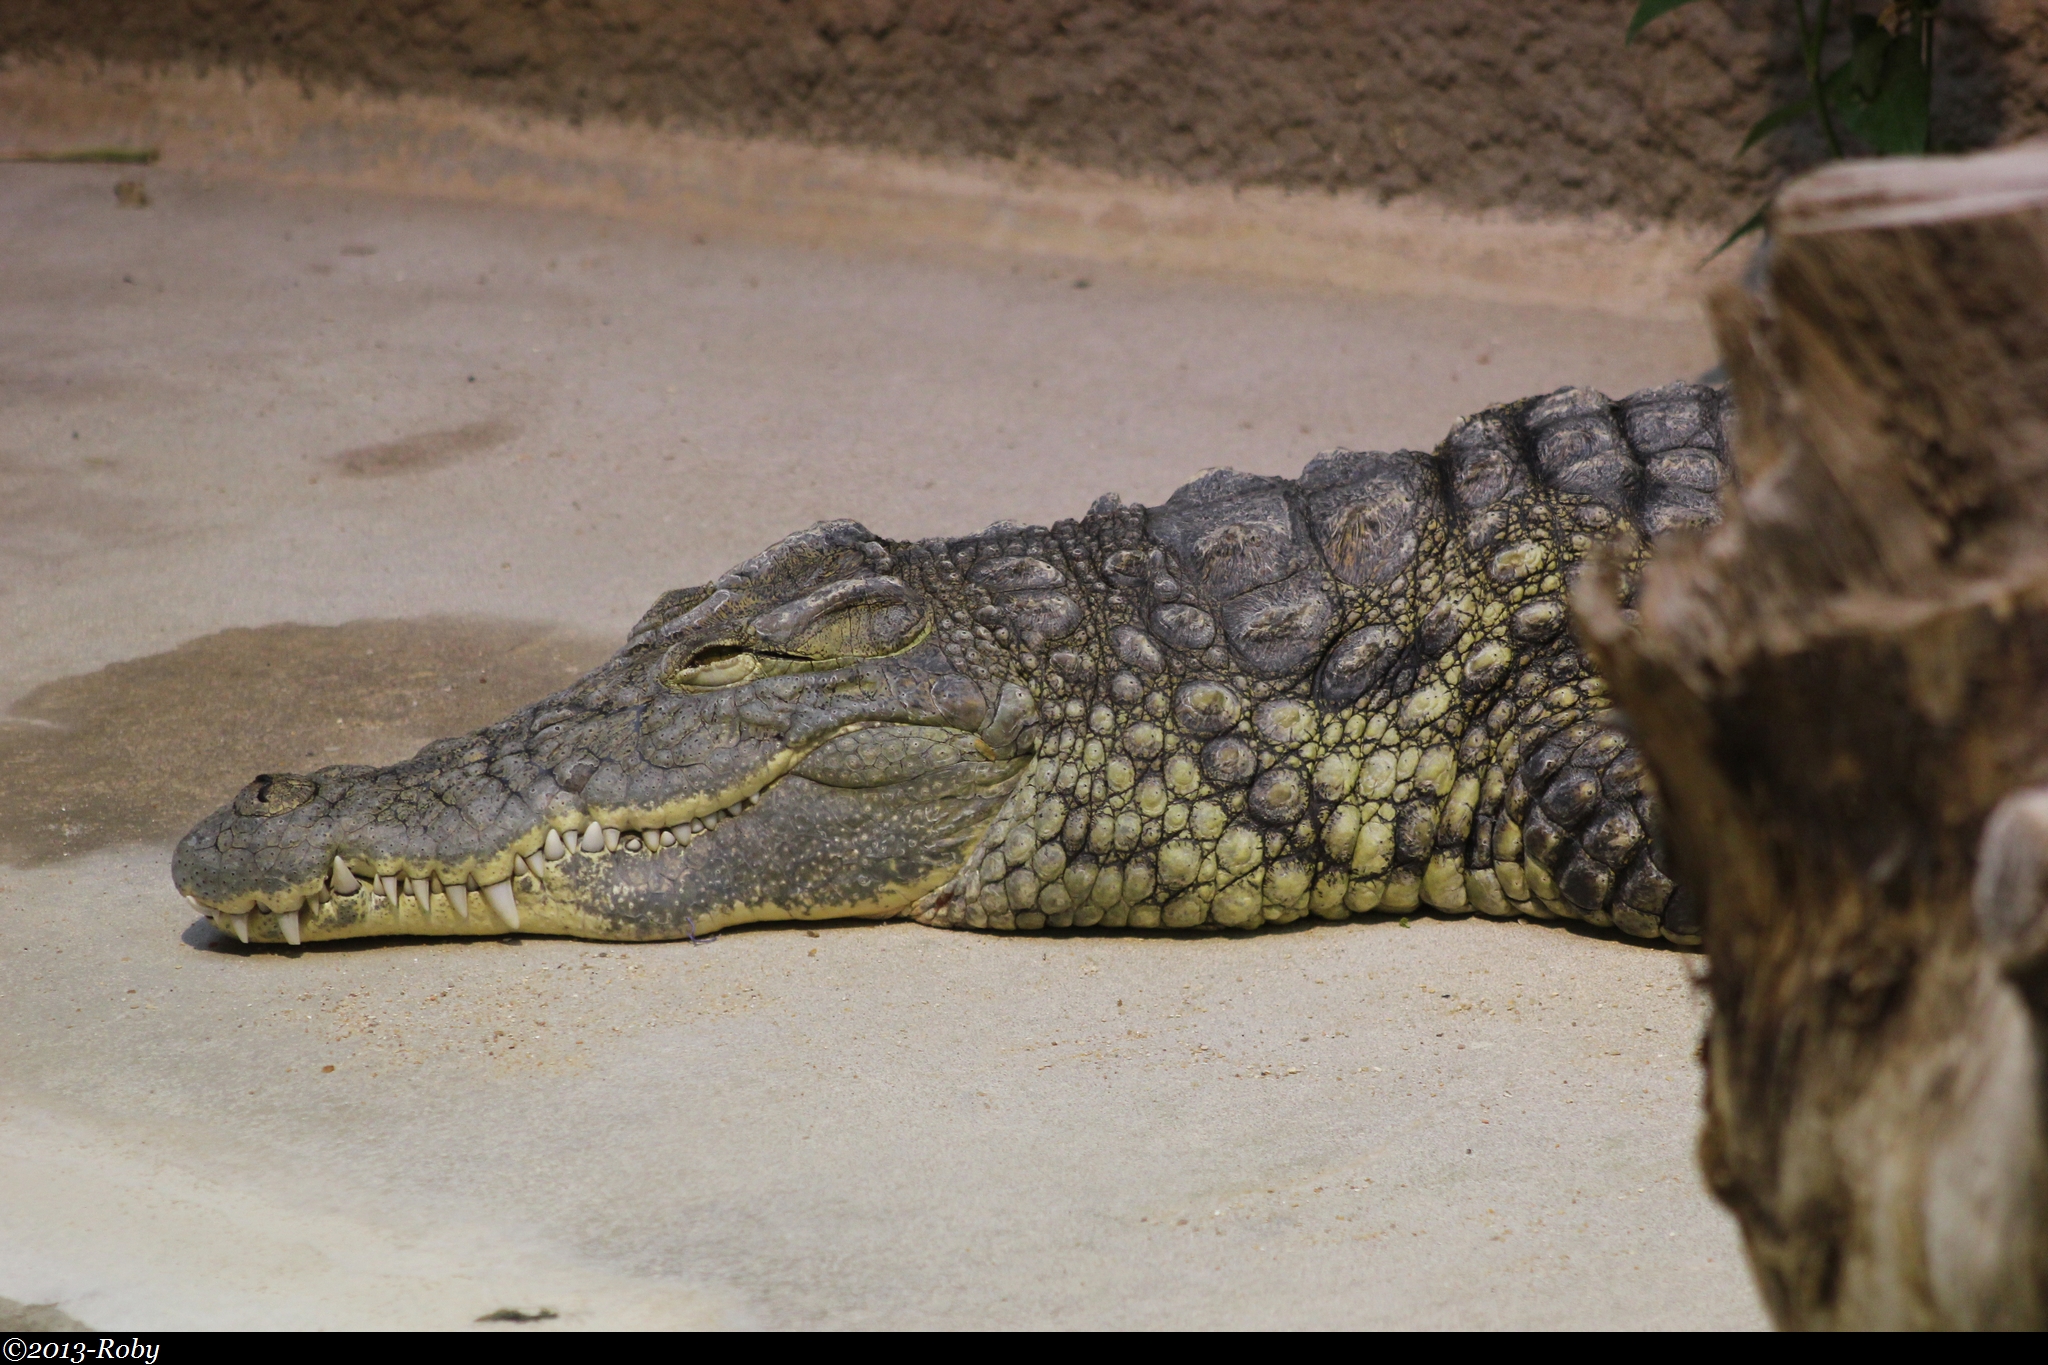 Crocodile_2013 -Roby